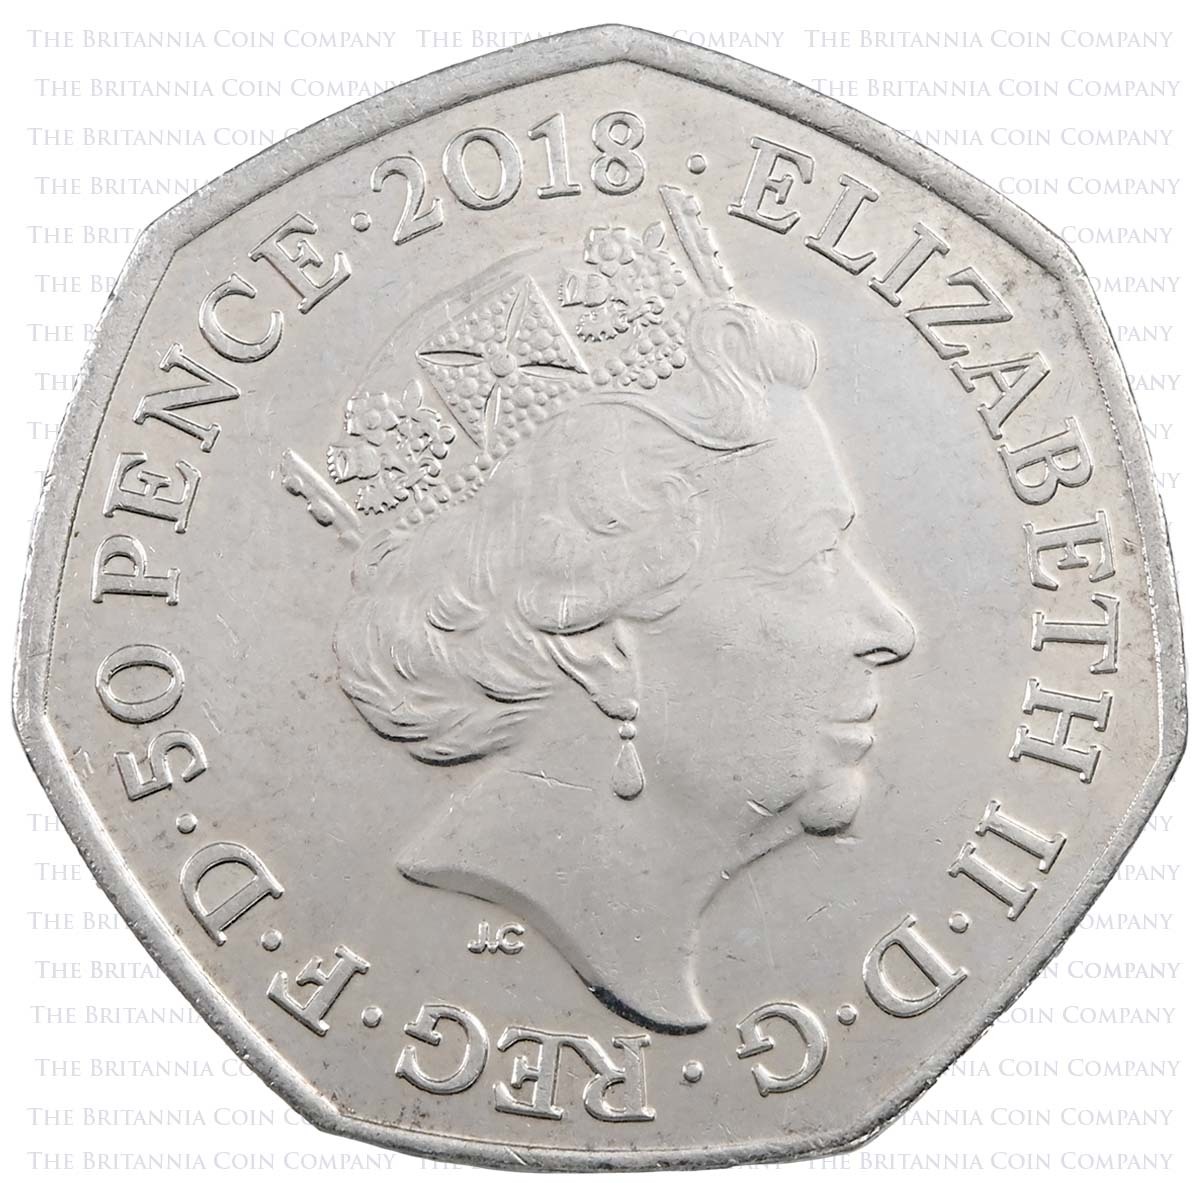 2018 Paddington Bear At Paddington Station Circulated Fifty Pence Coin Obverse